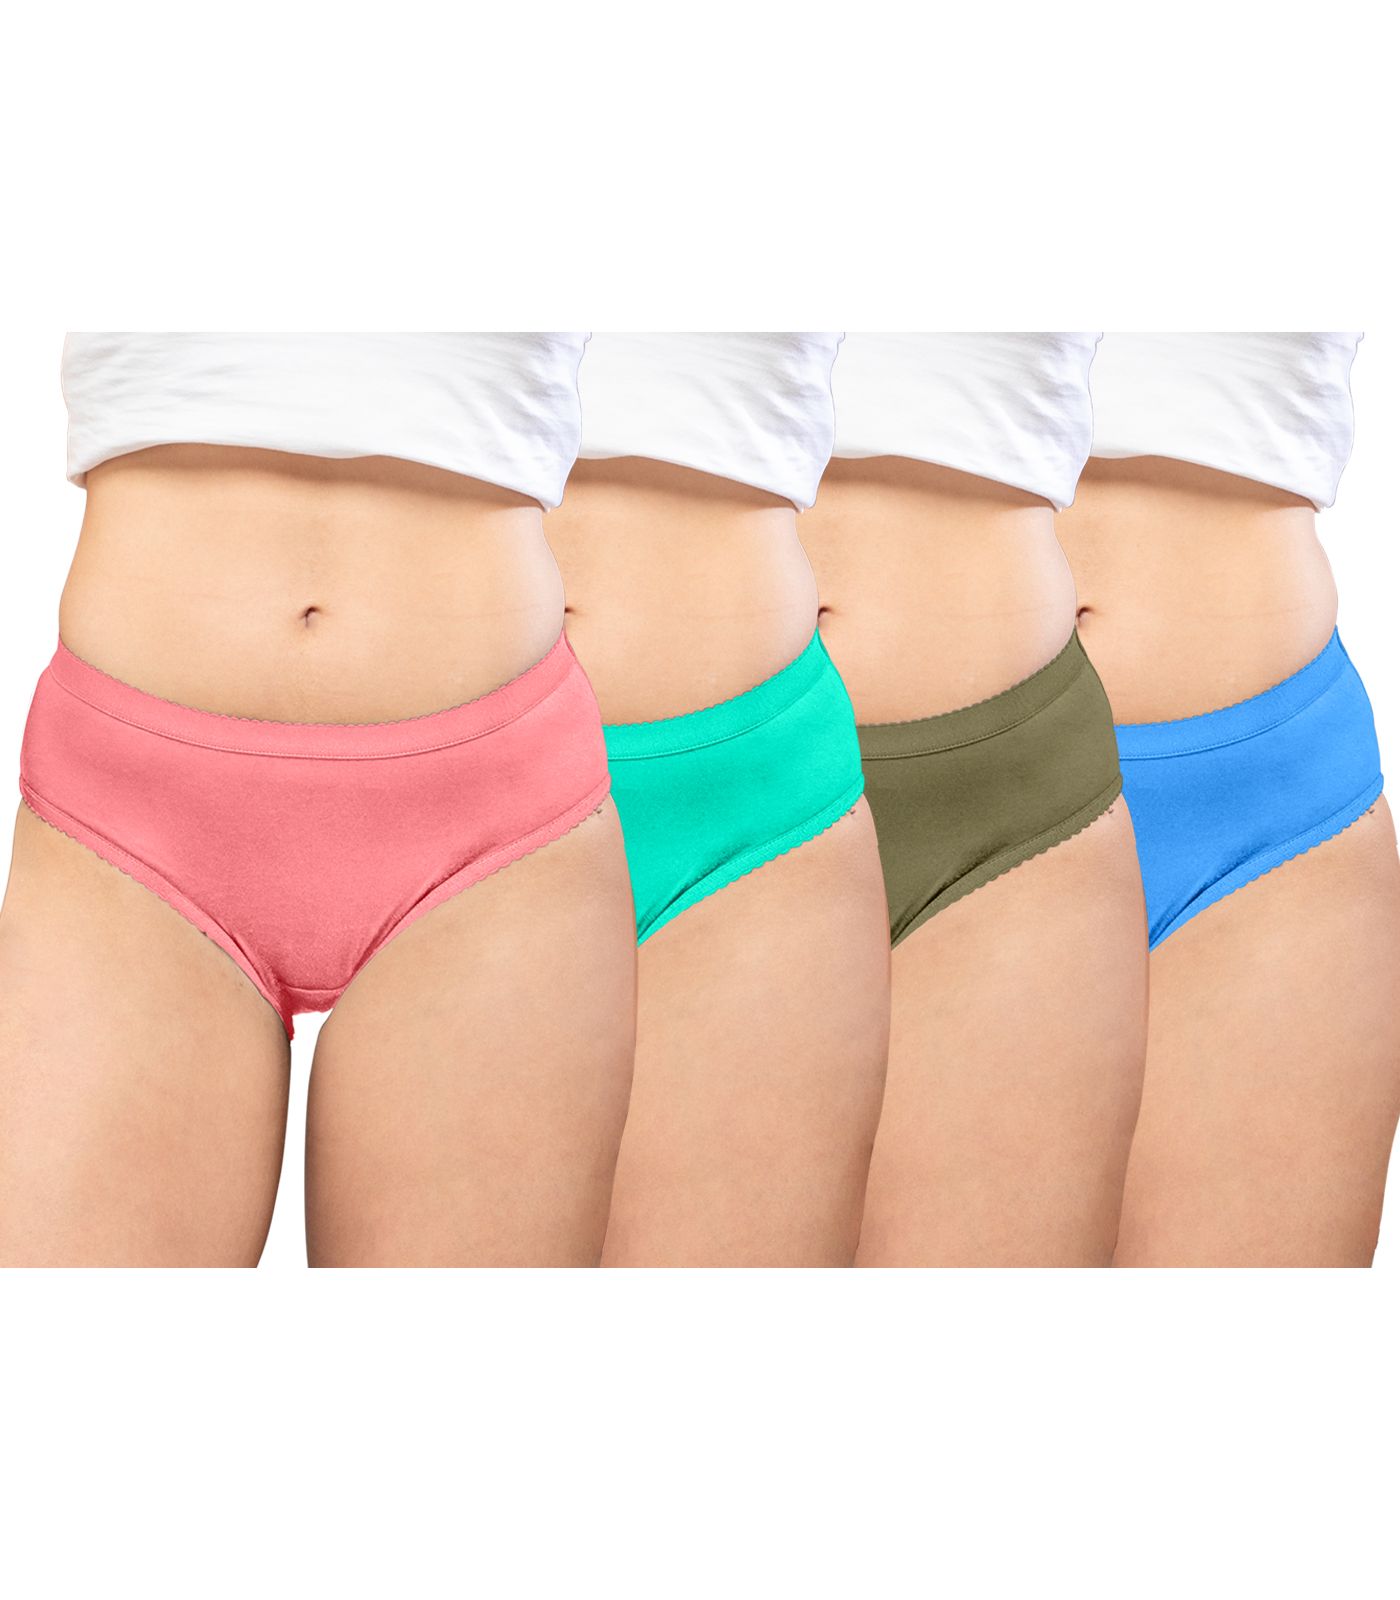 NRG Womens Cotton Assorted Colour Panties ( Pack of 4 Peach - Mint Green - Light Green - Light Blue ) L04 Hipster